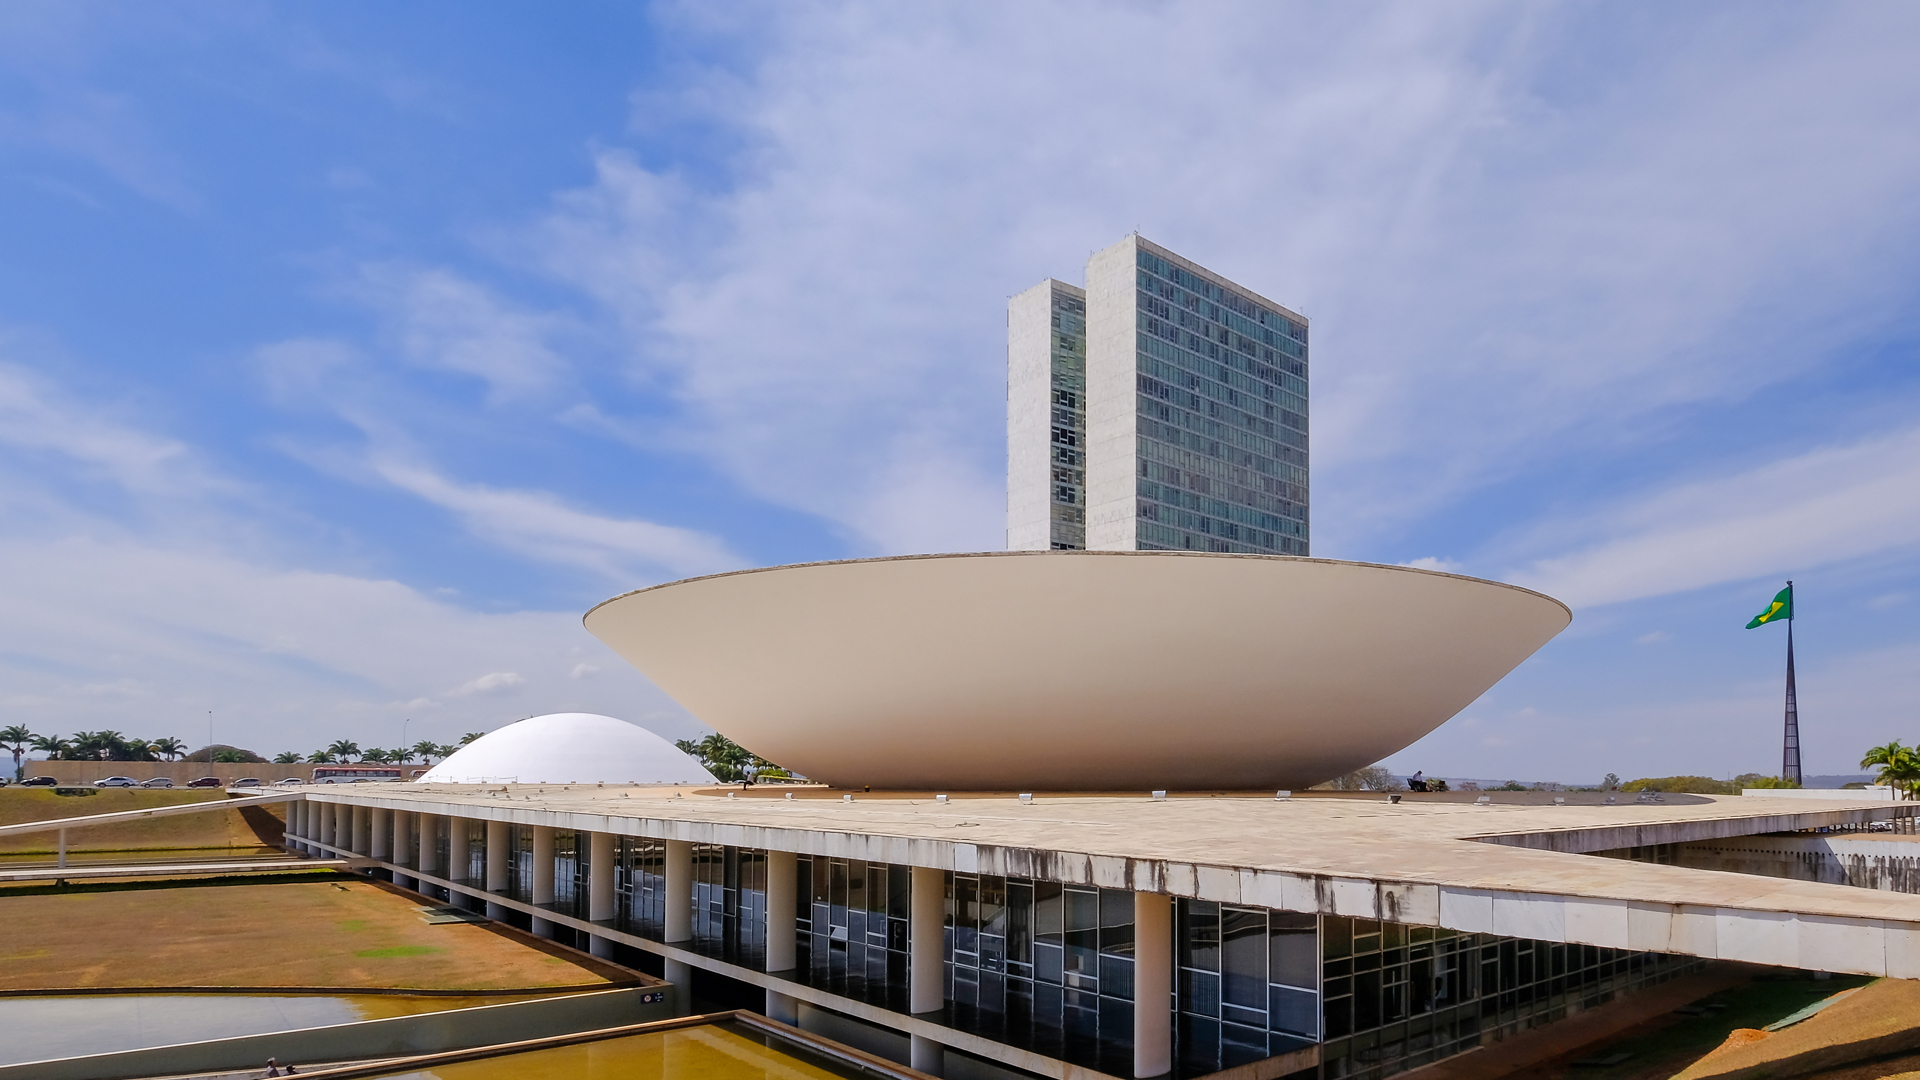 The National Congress of Brazil in Brasilia, designed by Oscar Niemeyer image